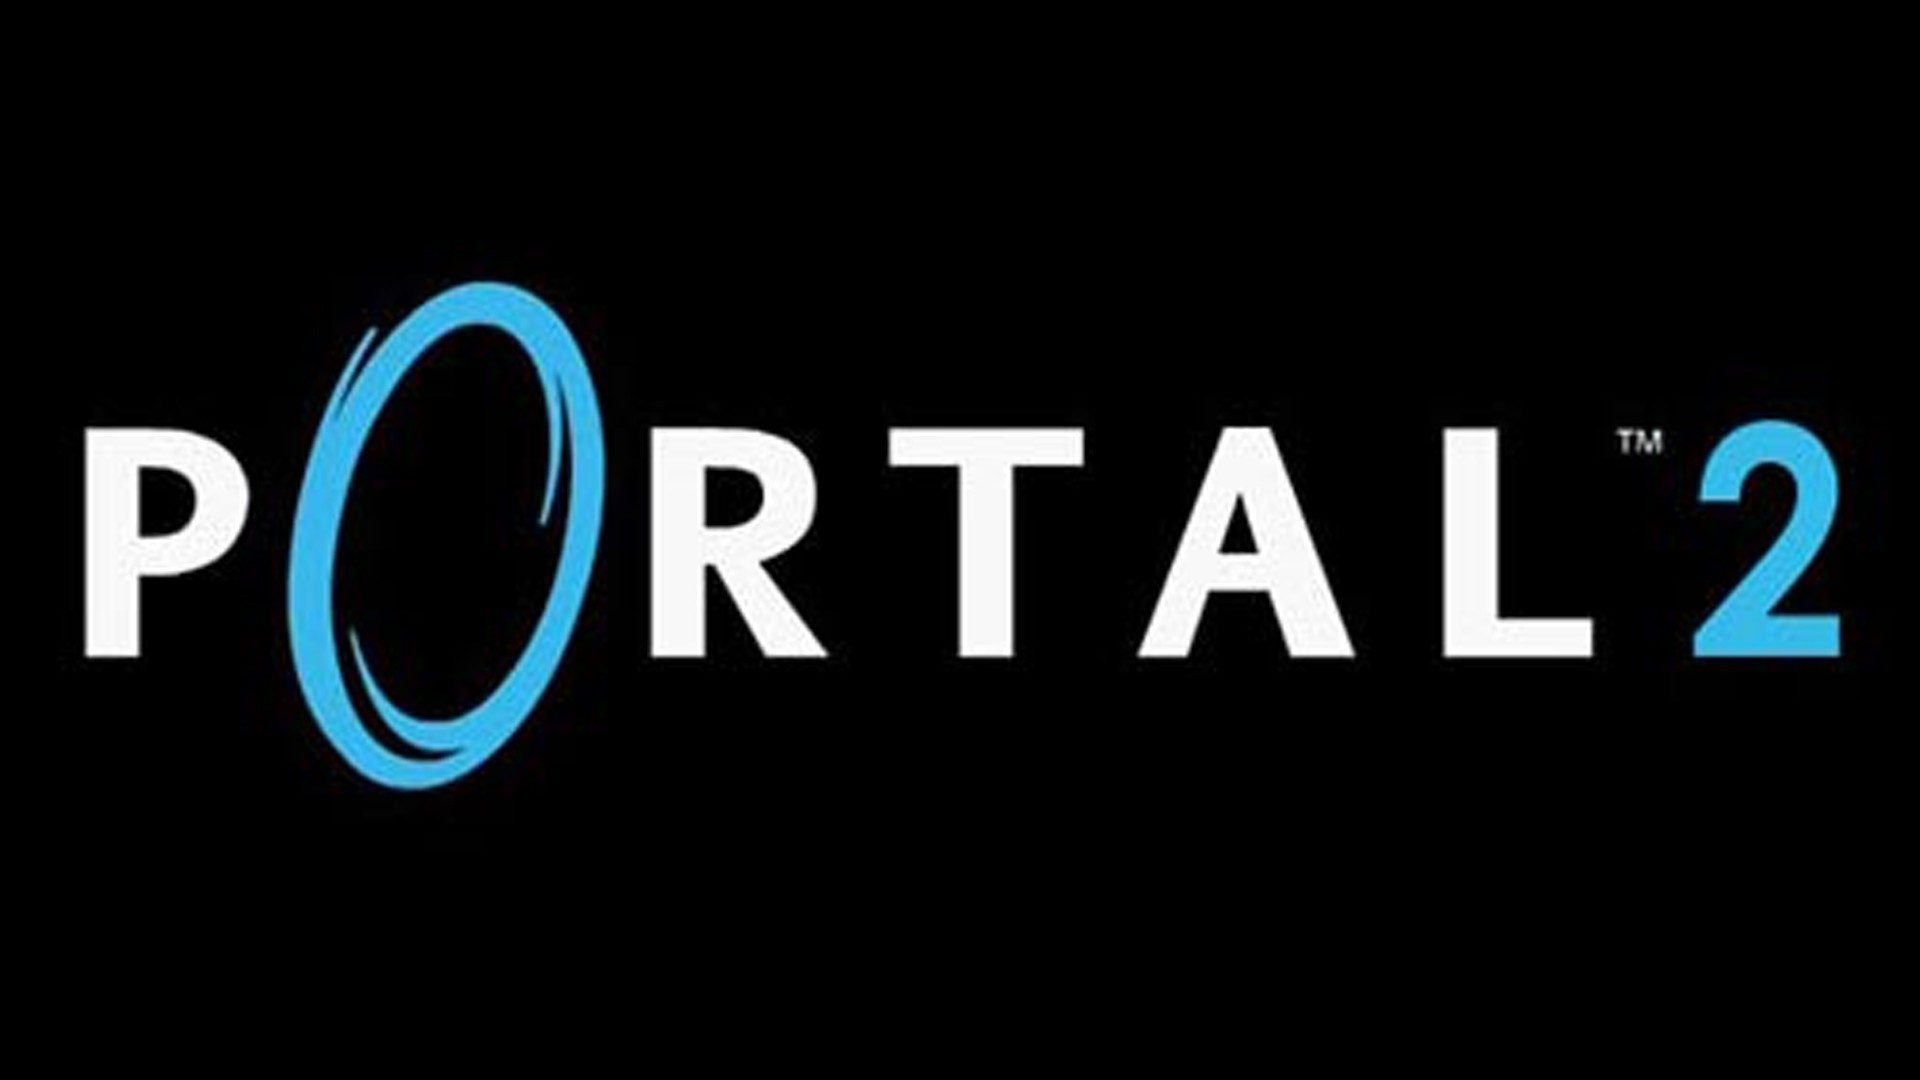 Portal 2 no image фото 62